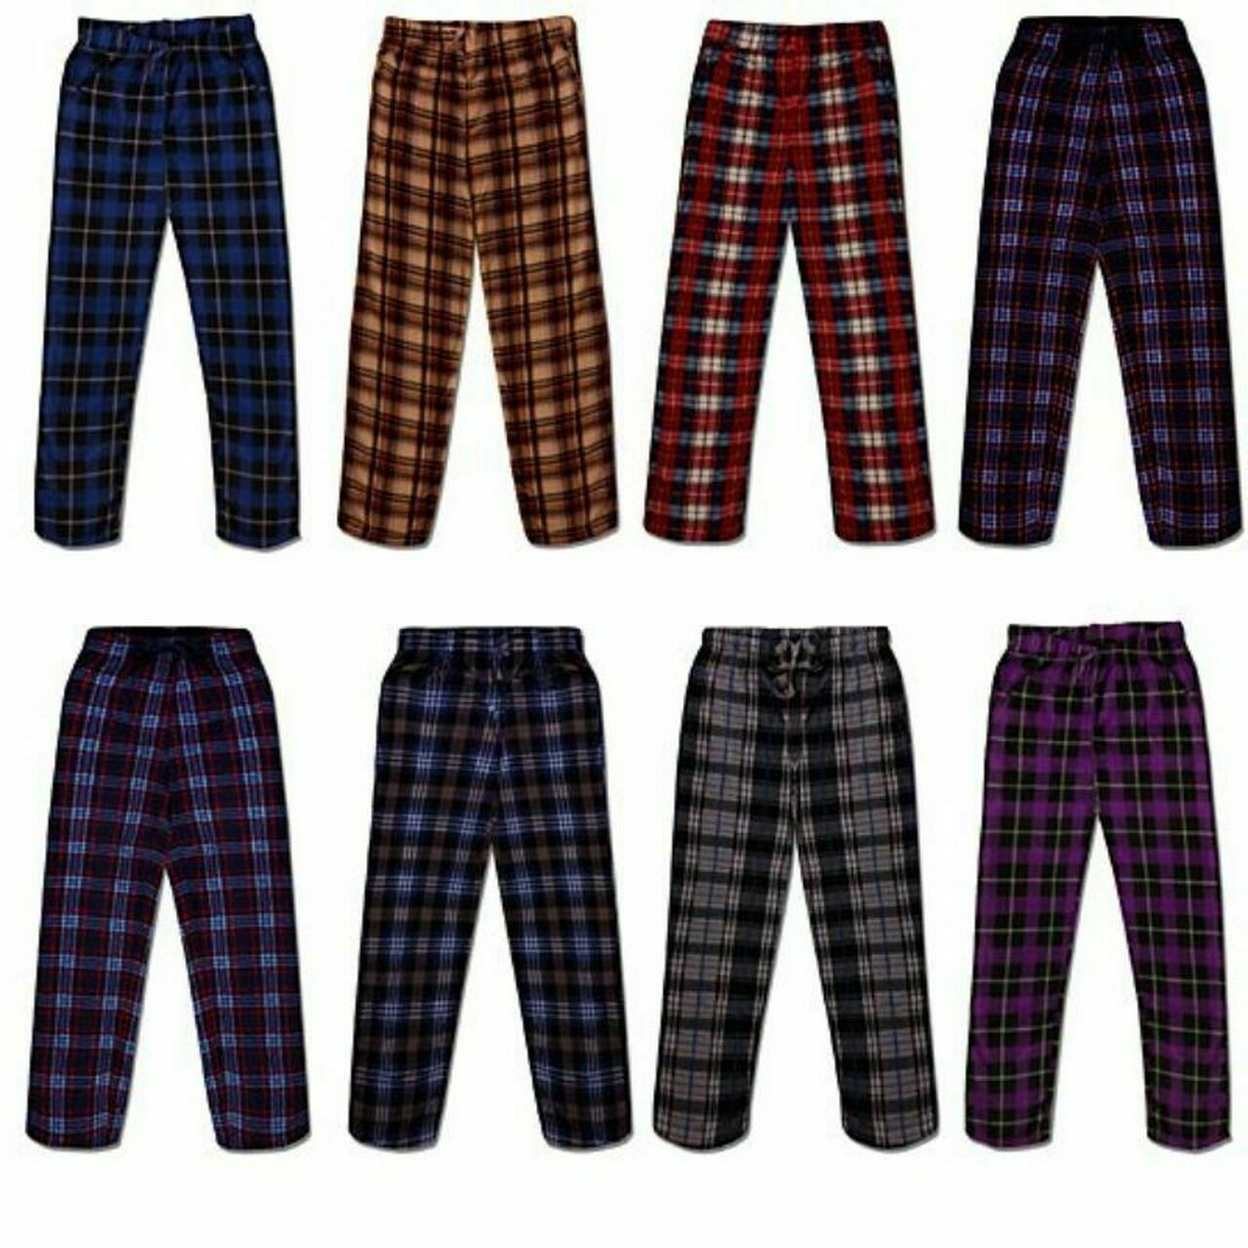 2-Pack: Men's Ultra Soft Cozy Flannel Fleece Plaid Pajama Sleep Bottom Lounge Pants - Black & Blue, Medium